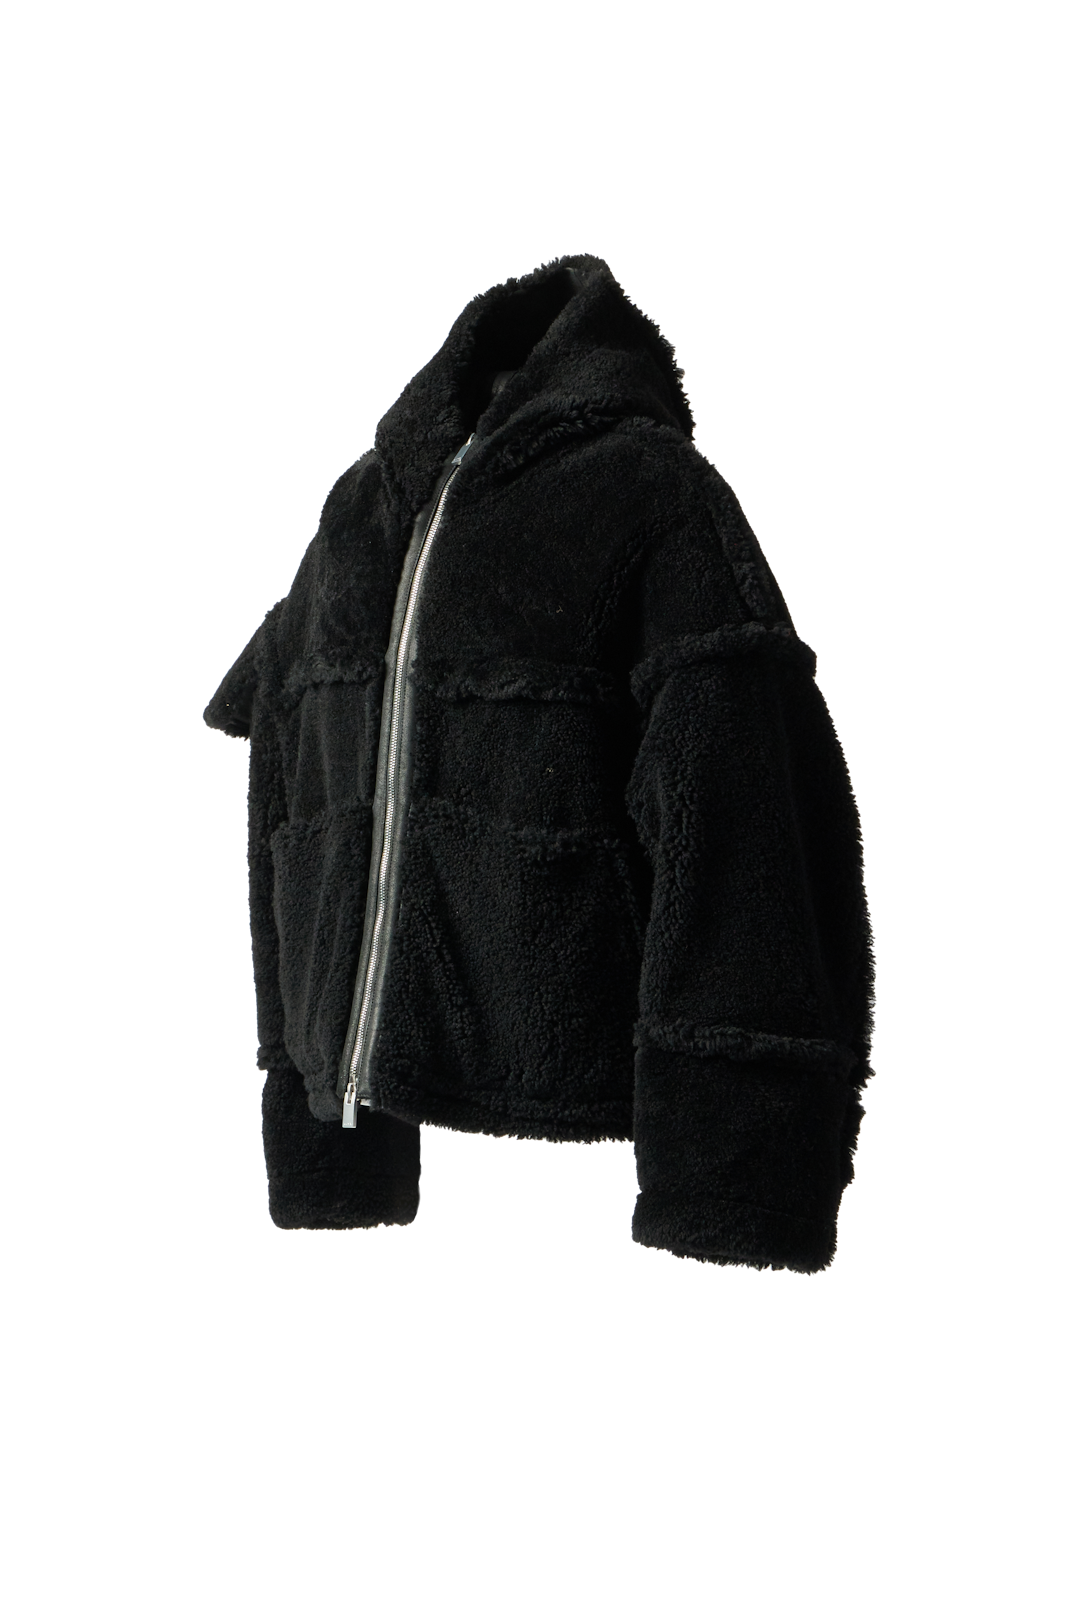 1017 ALYX 9SM - Shearling Jacket product image